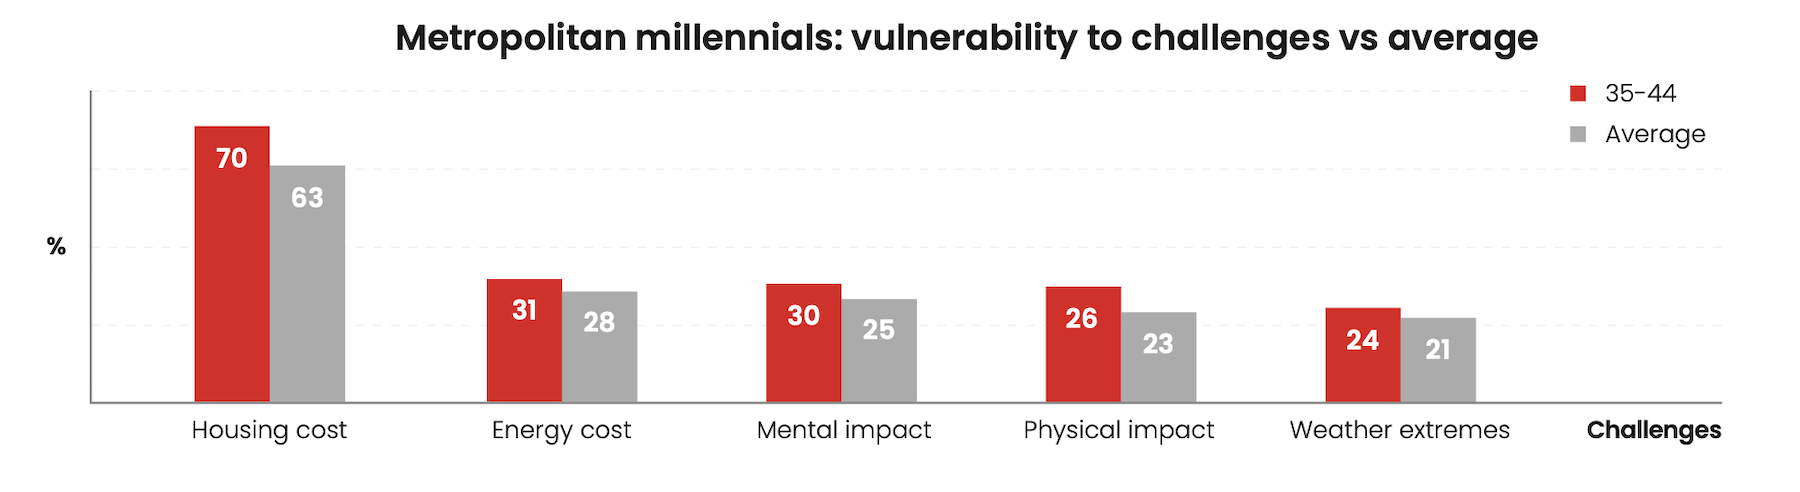 Millennial vulnerability to urban pressures